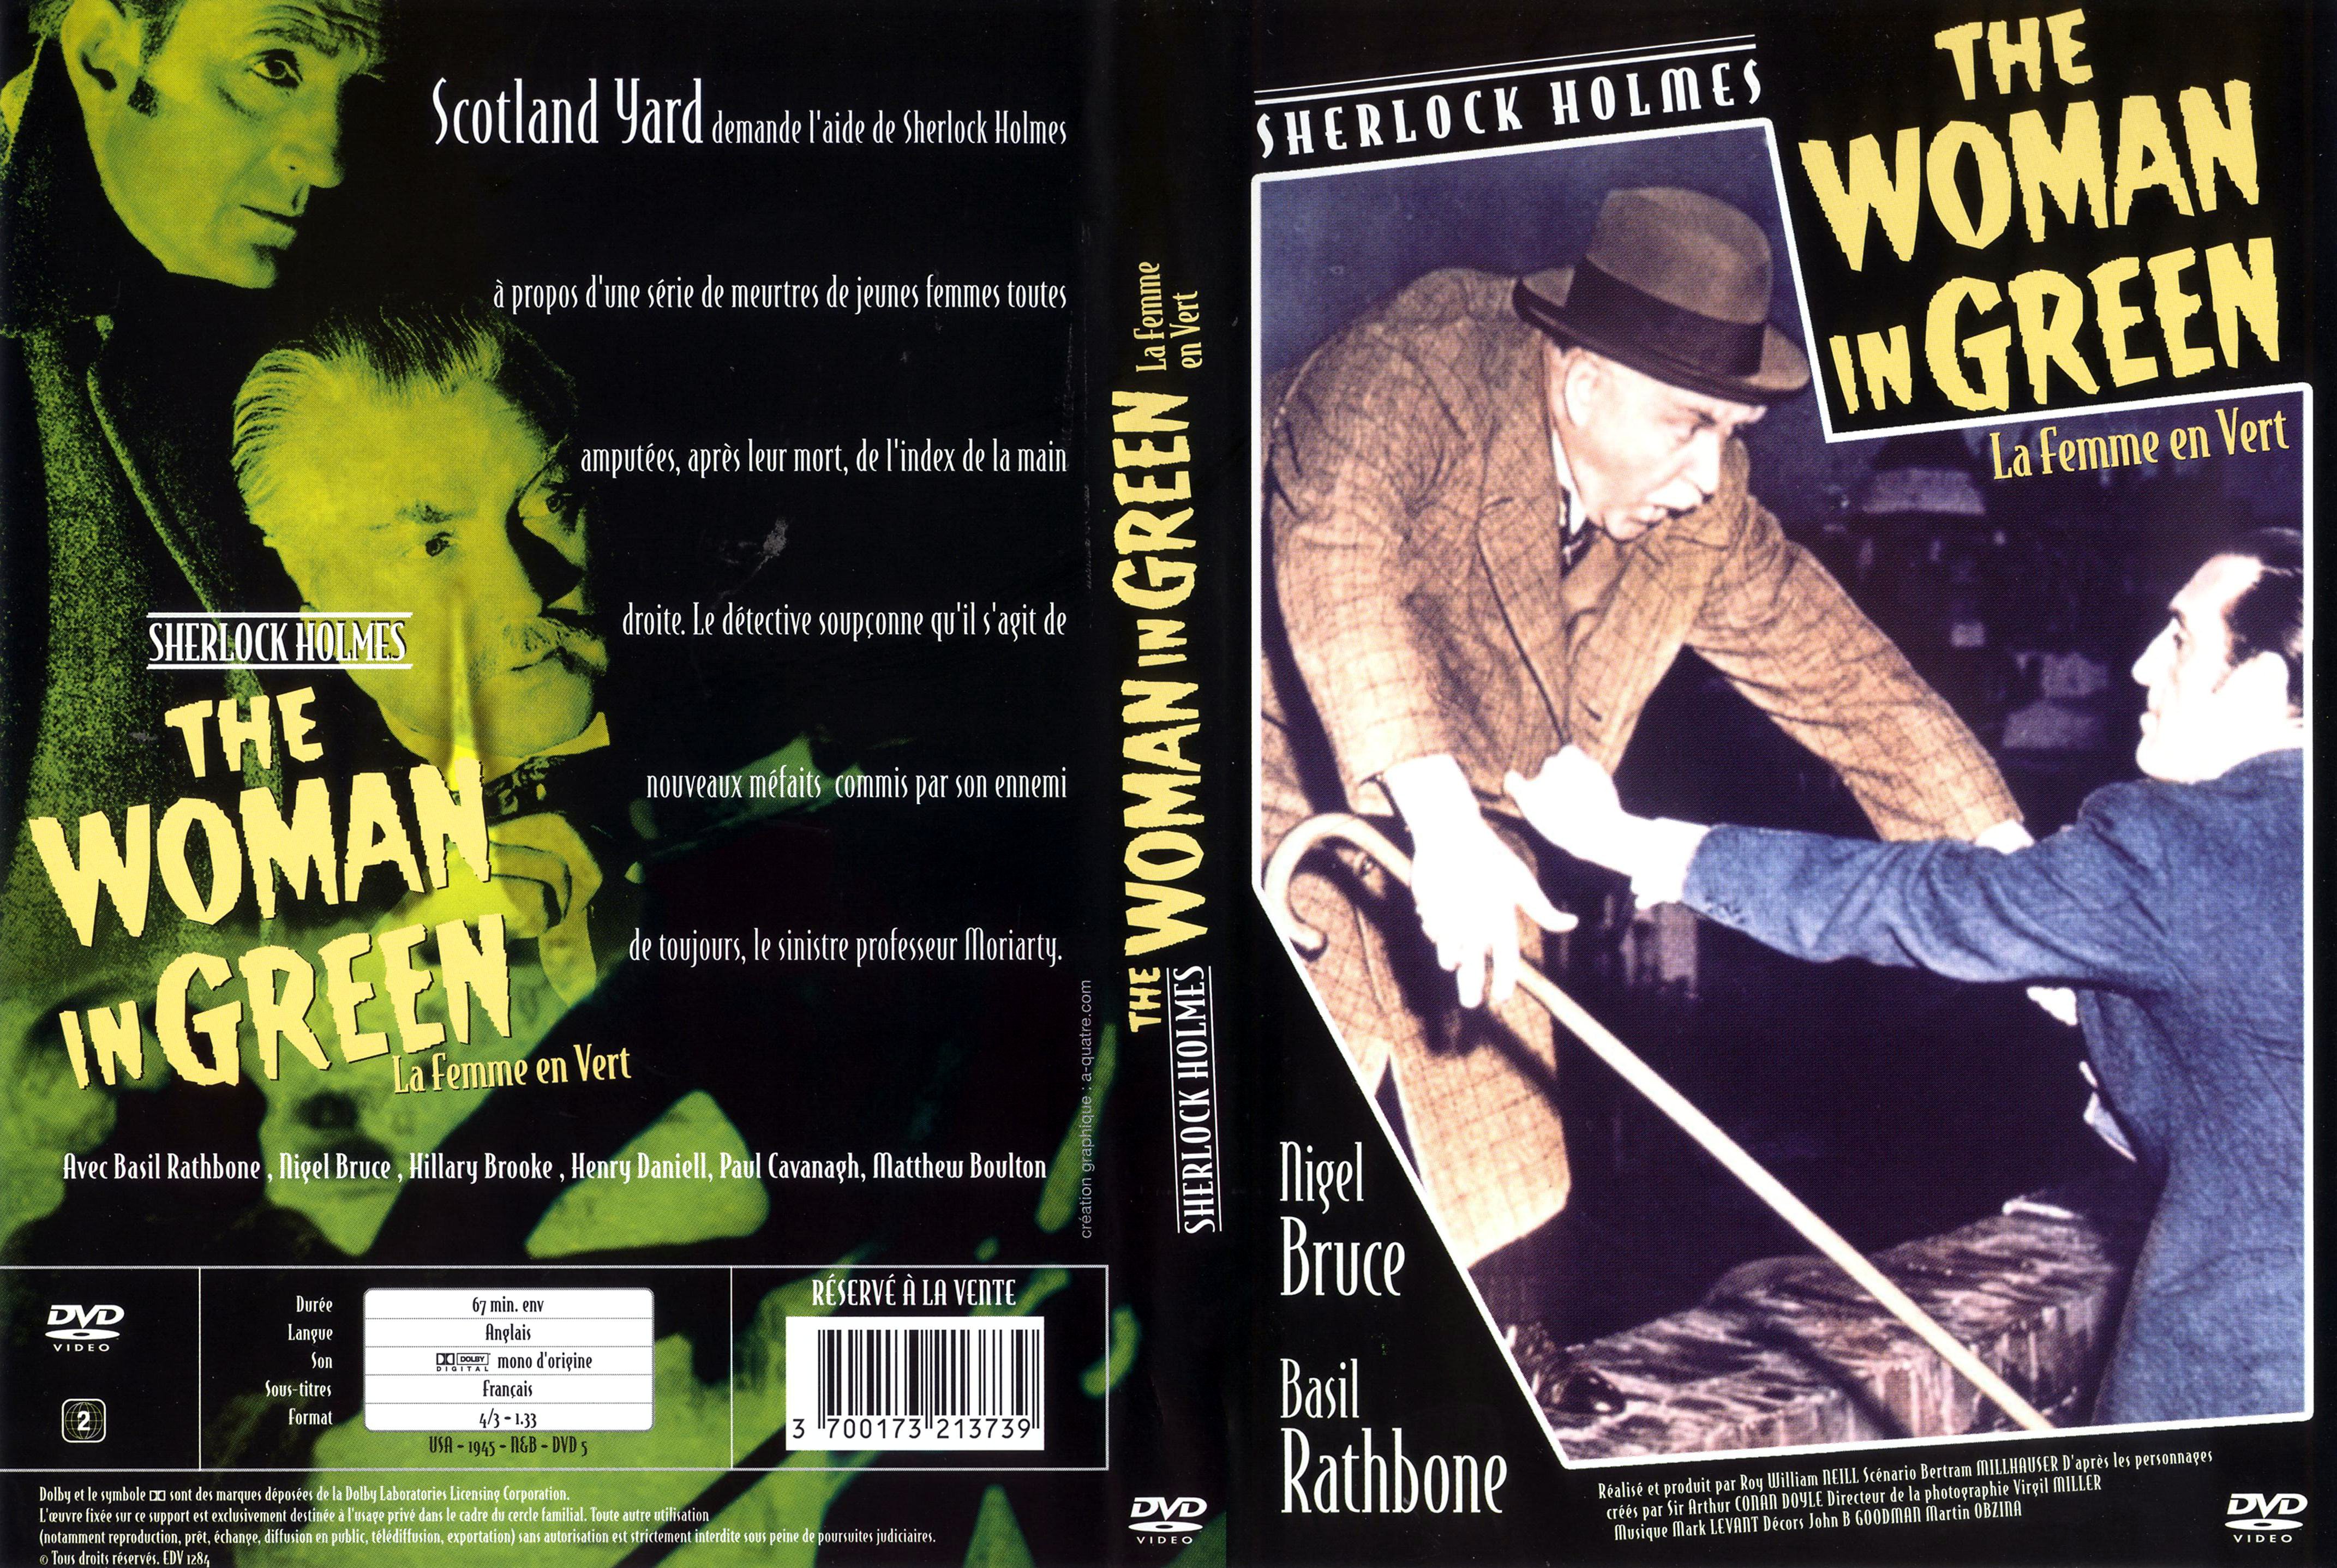 Jaquette DVD Sherlock Holmes - La femme en vert v2